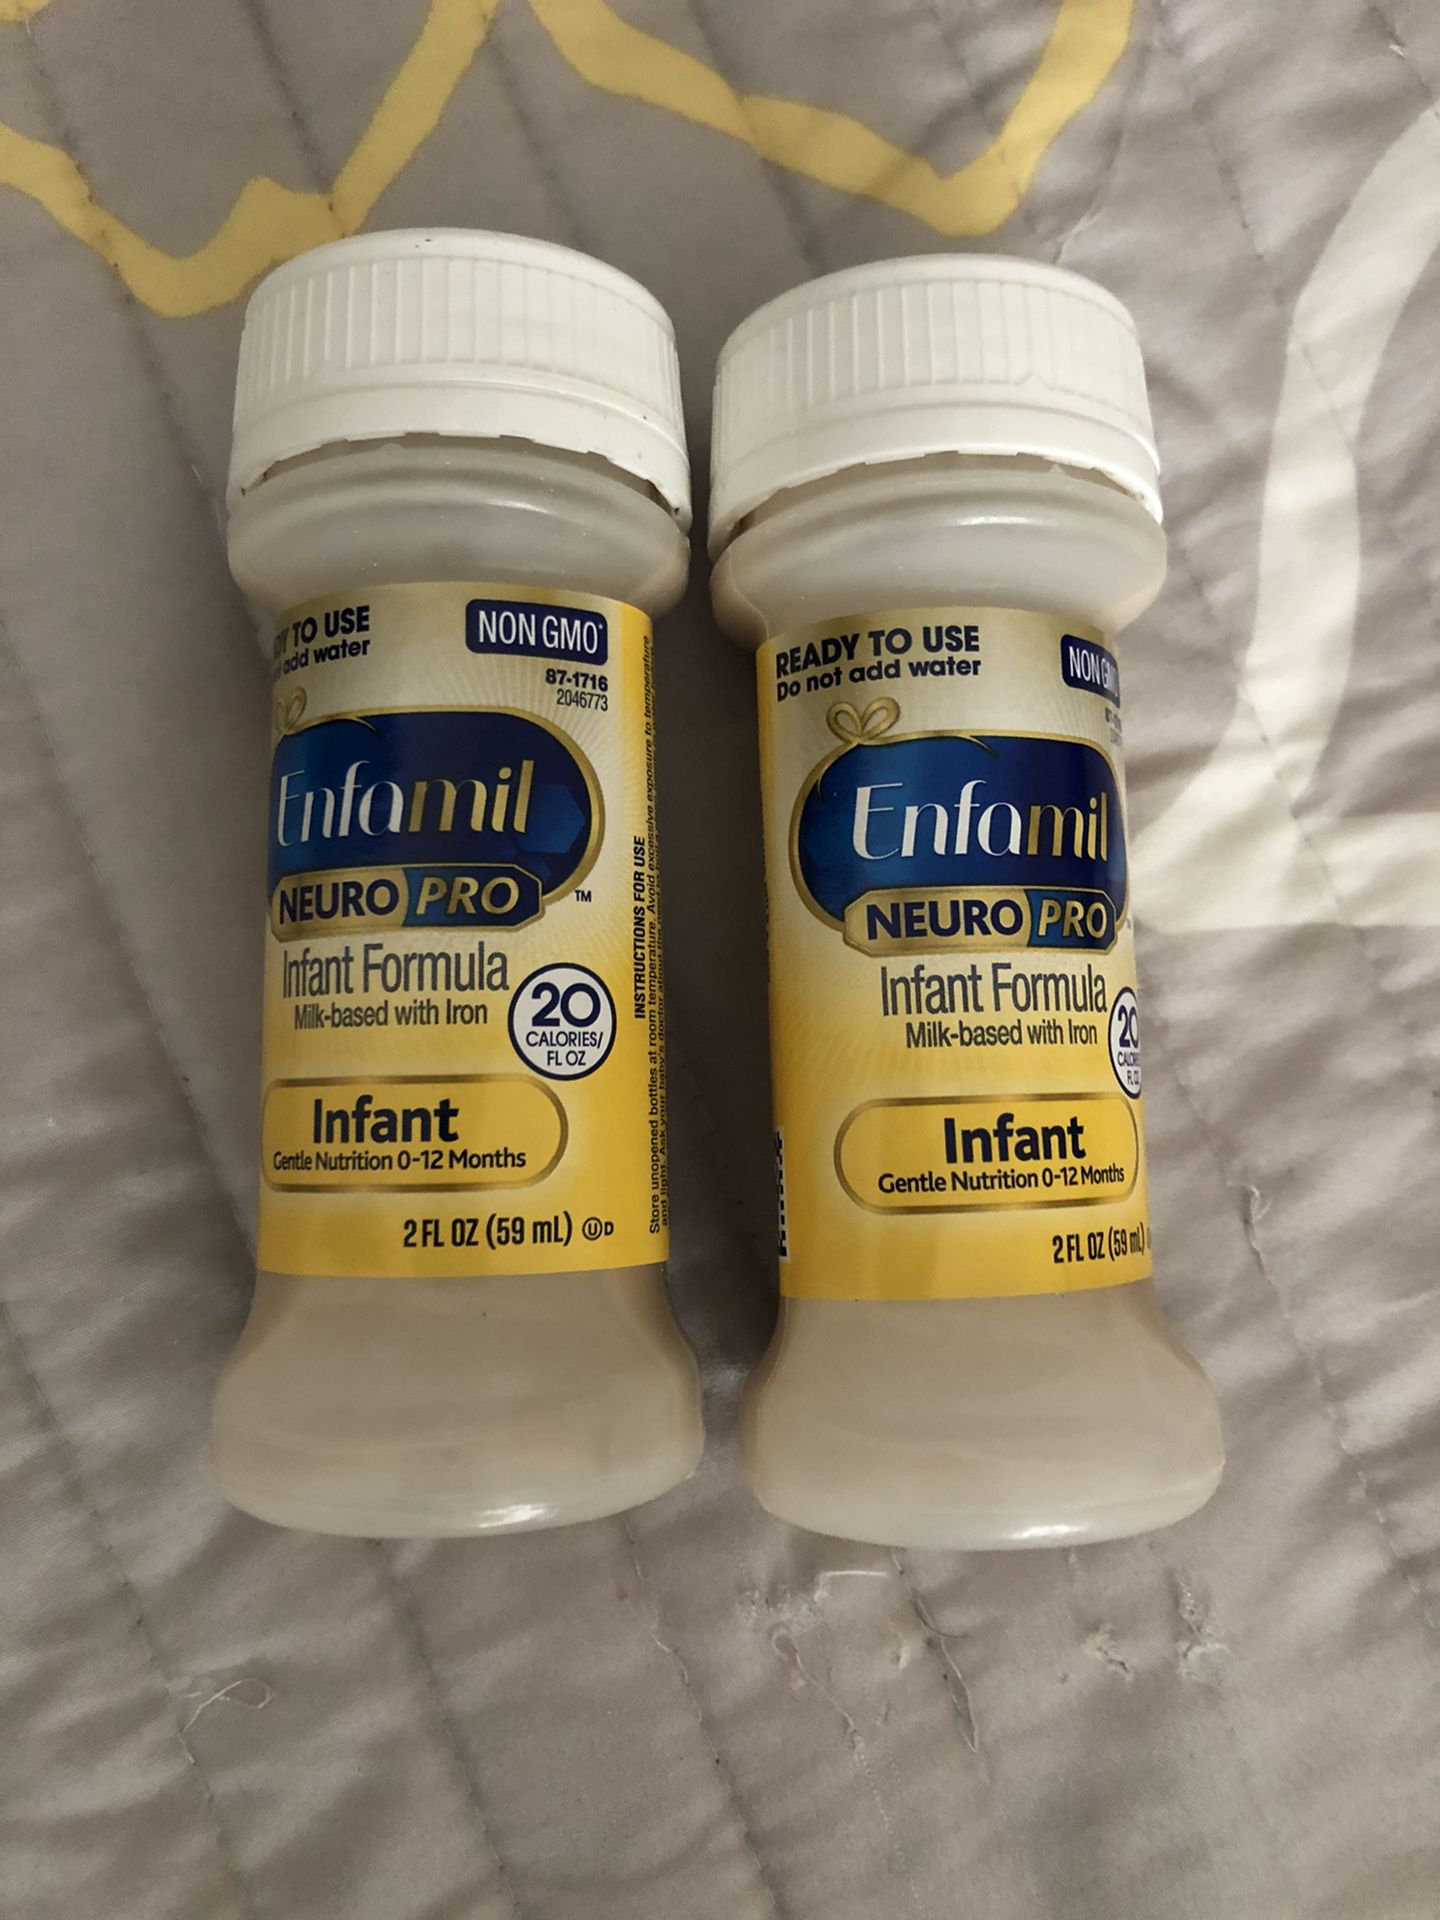 Liquid Enfamil infant formula